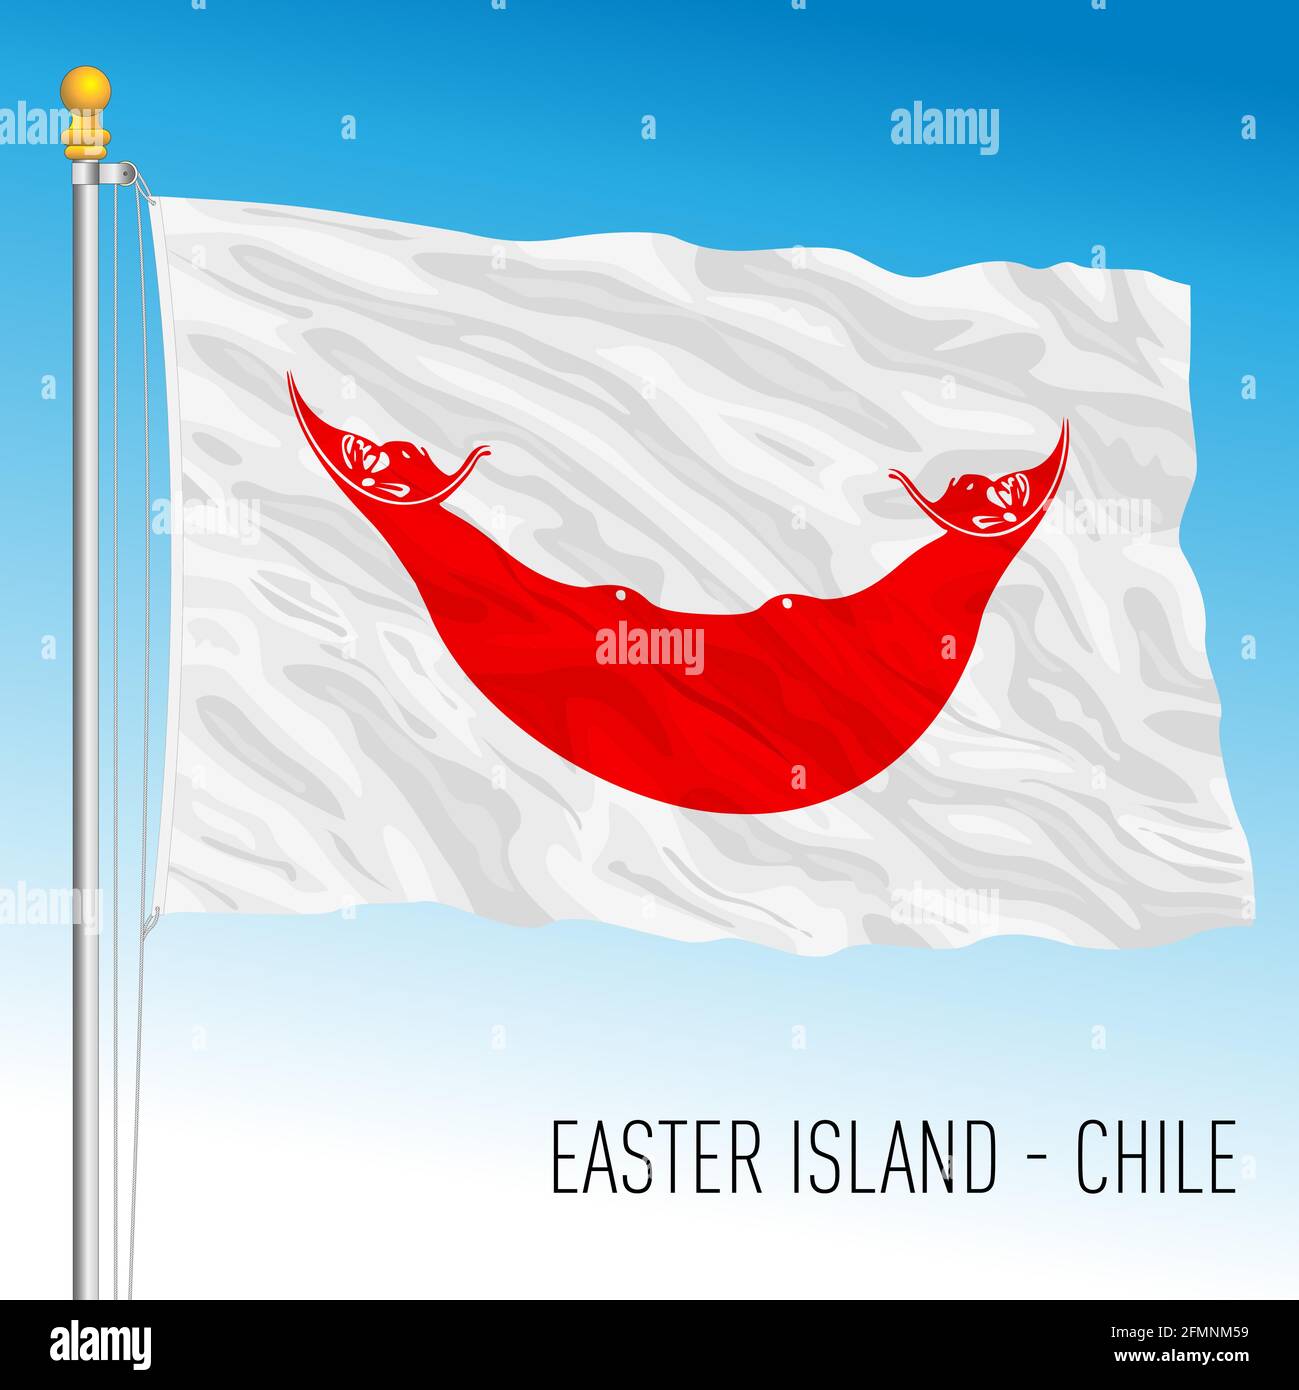 Flagge der Osterinsel, chilenisches Territorium, Vektorgrafik Stock Vektor